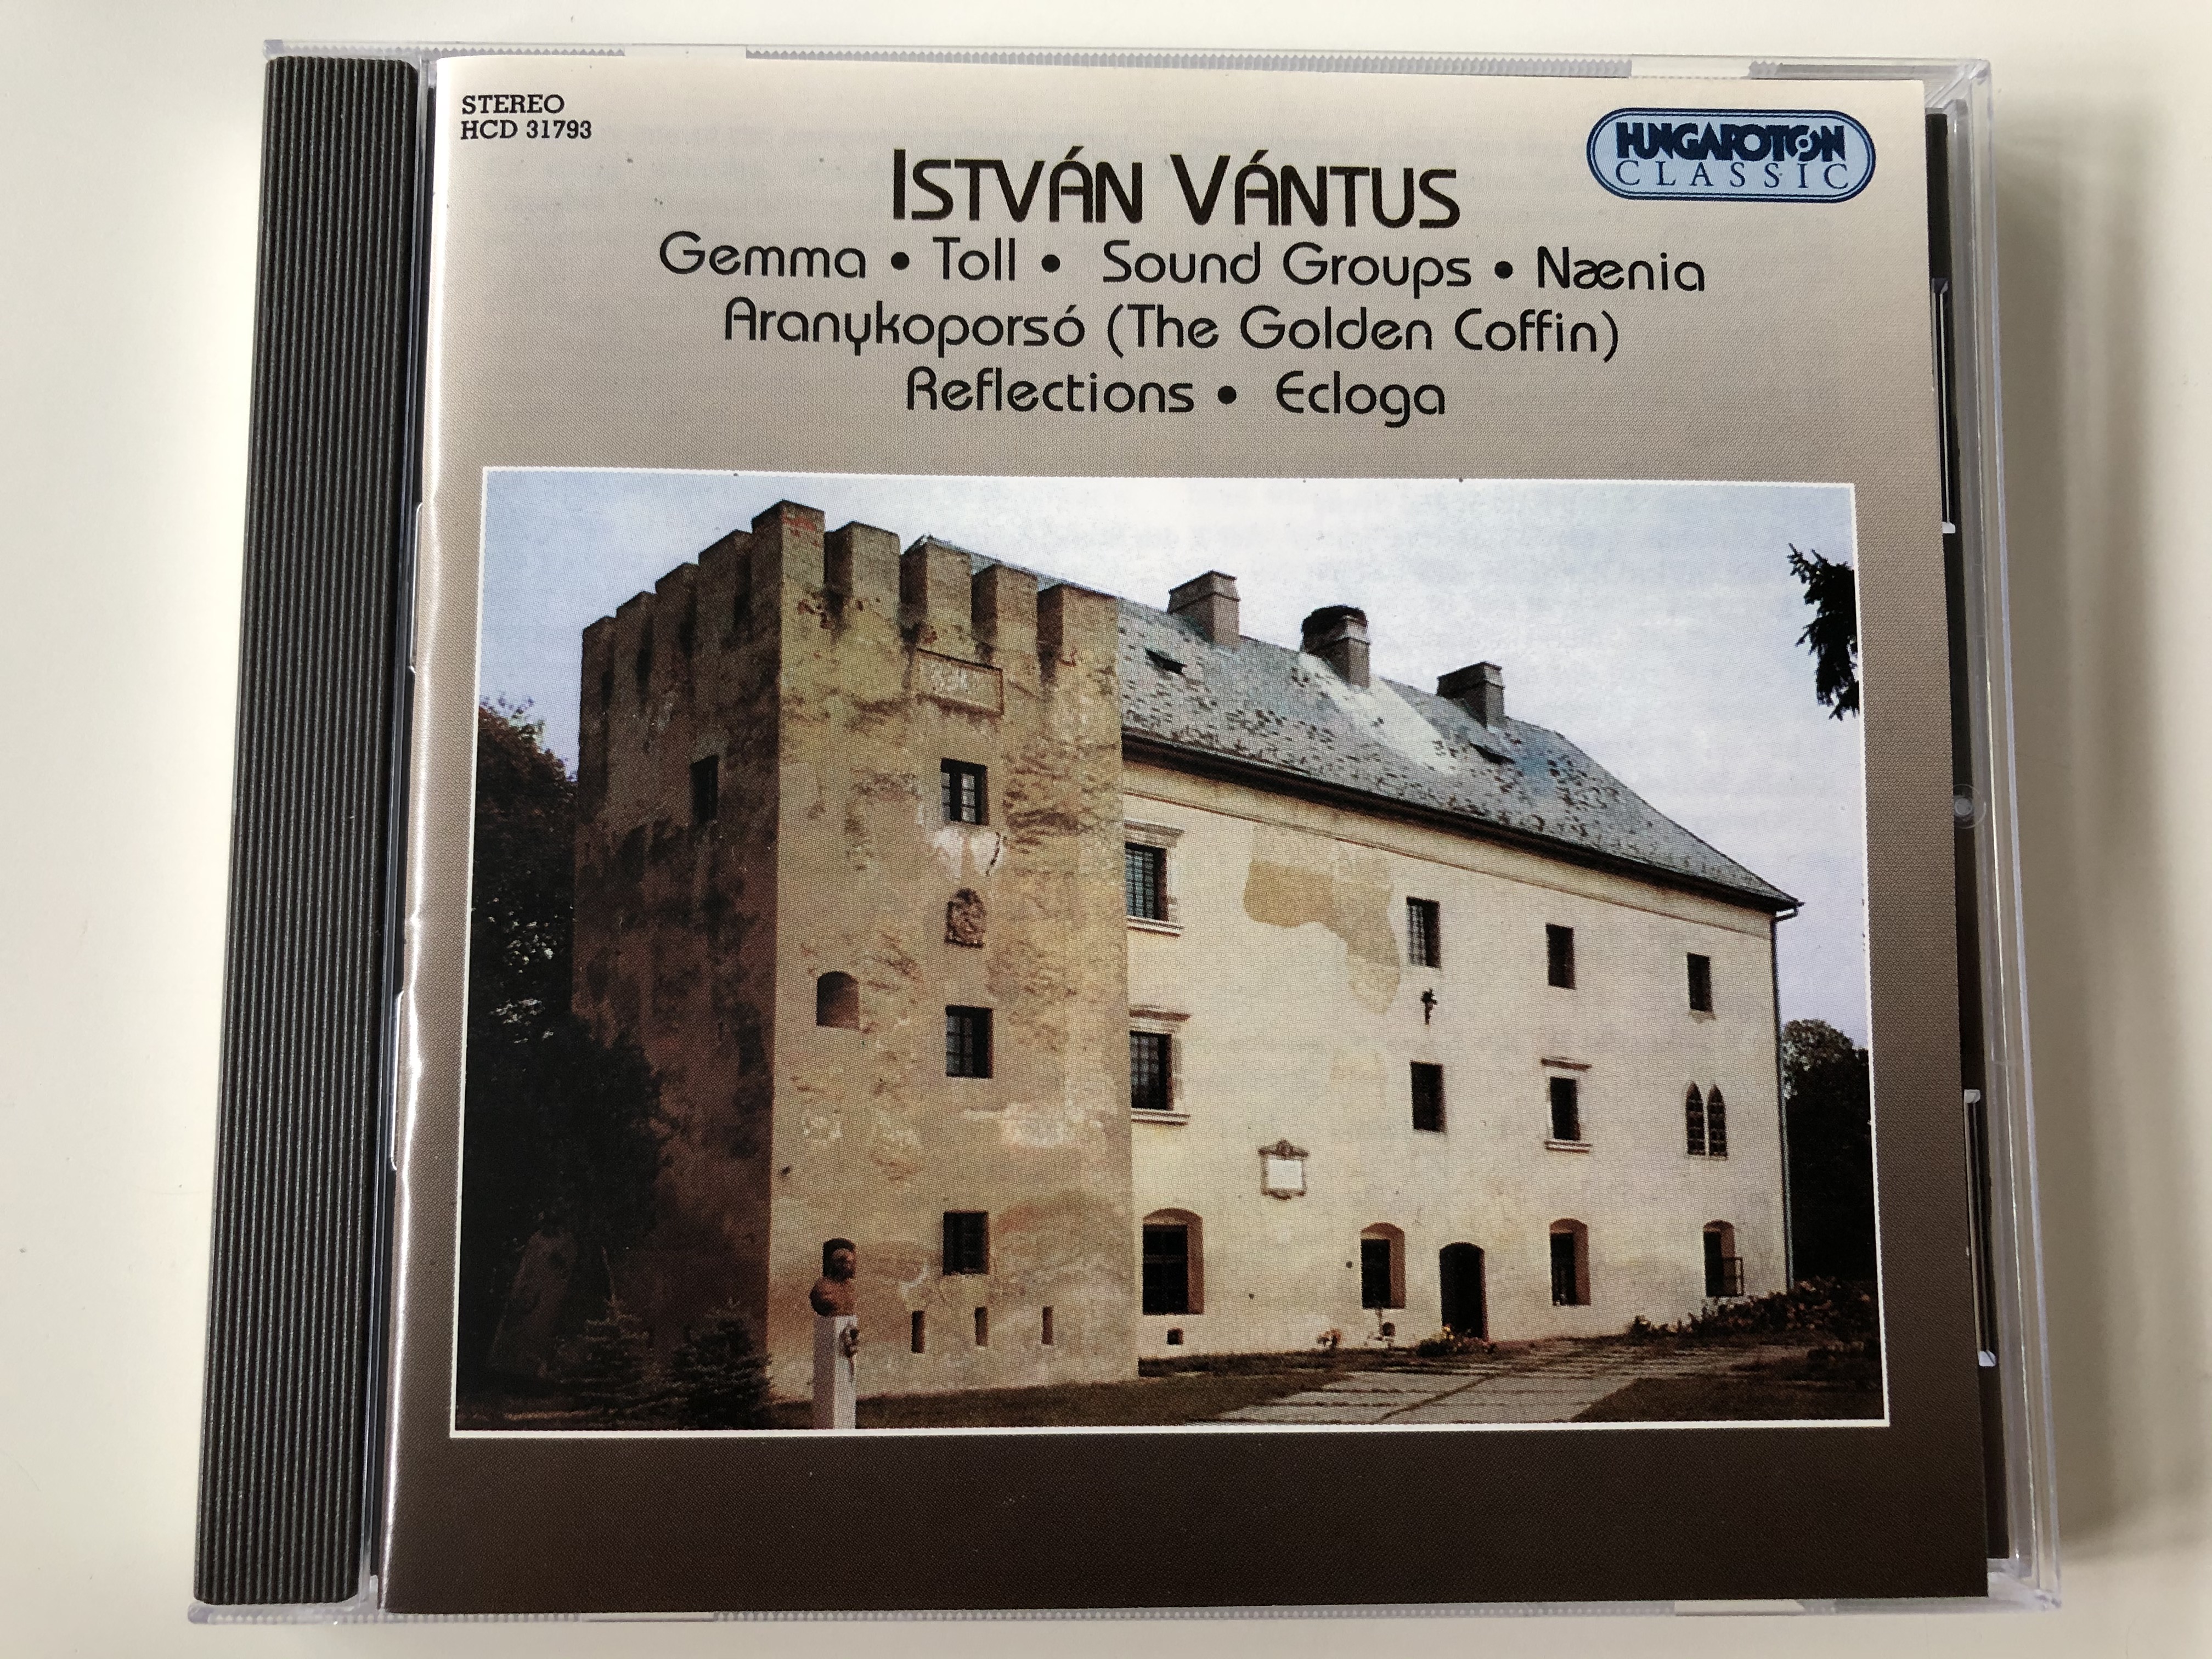 istvan-vantus-gemma-toll-sound-groups-naenia-aranykoporso-the-golden-coffin-reflections-ecloga-hungaroton-classic-audio-cd-1988-stereo-hcd-31793-1-.jpg